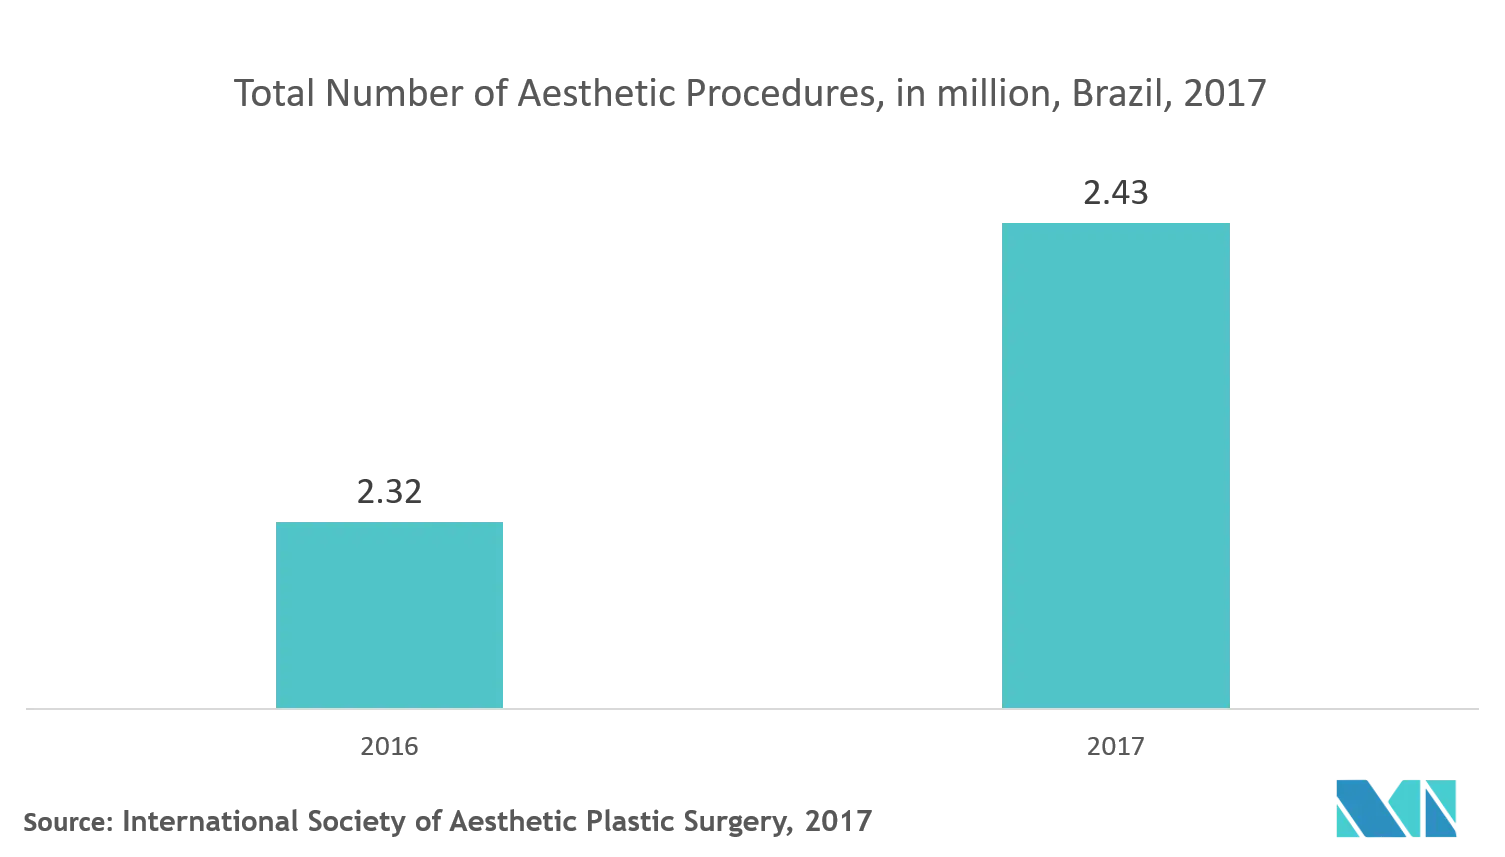 Brazil Minimally Invasive Surgery Devices Market Share